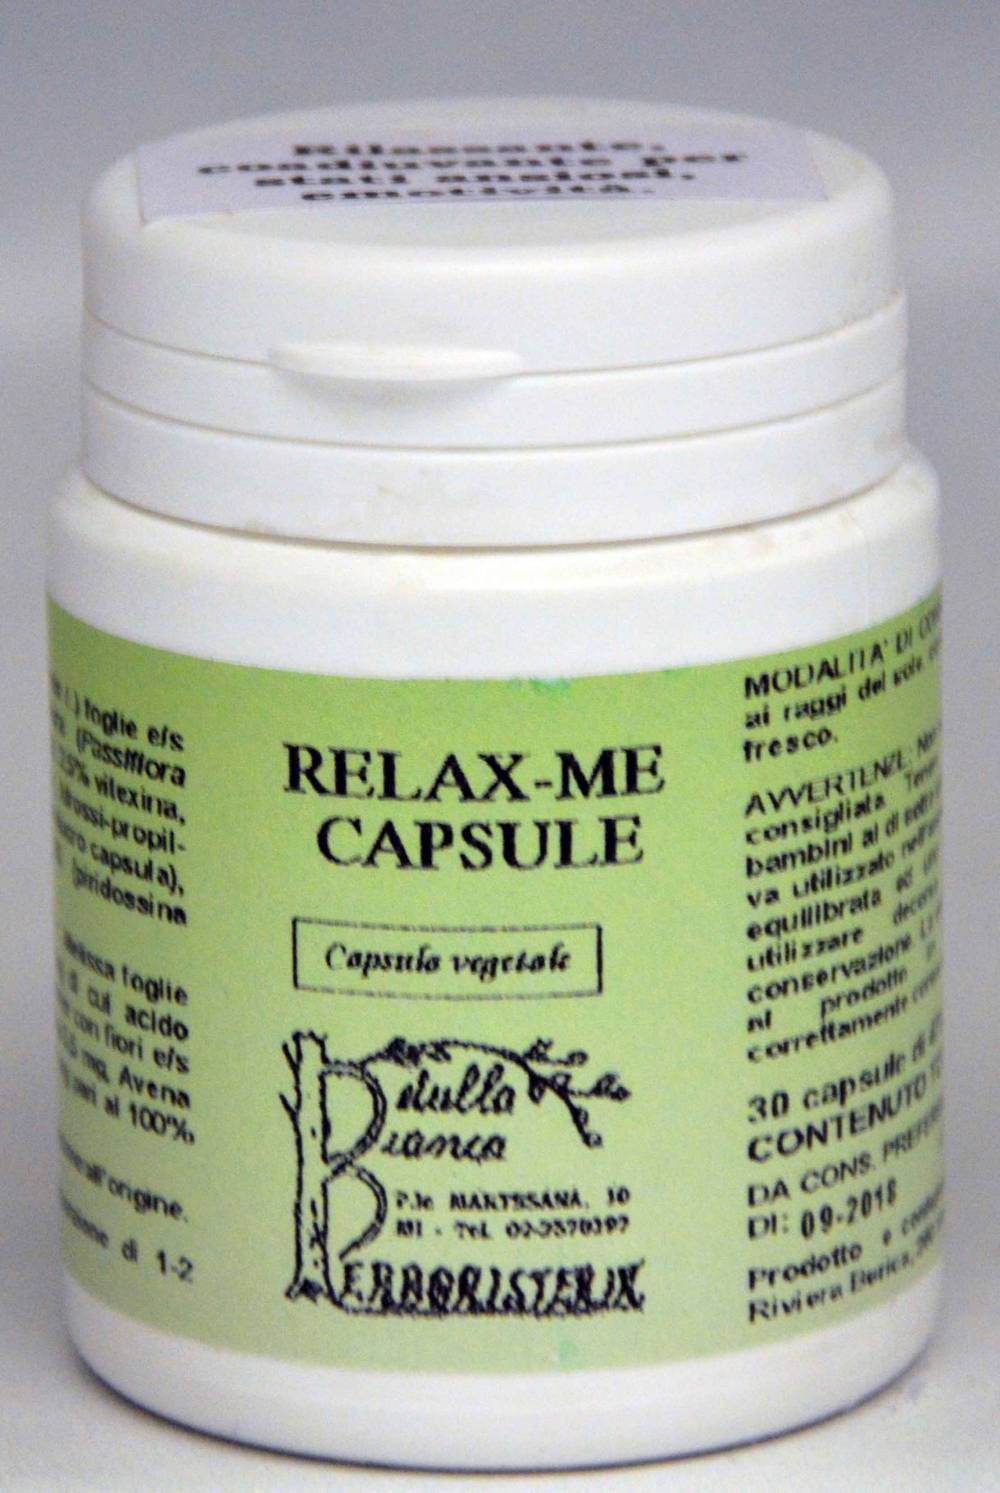 Relax-me capsule